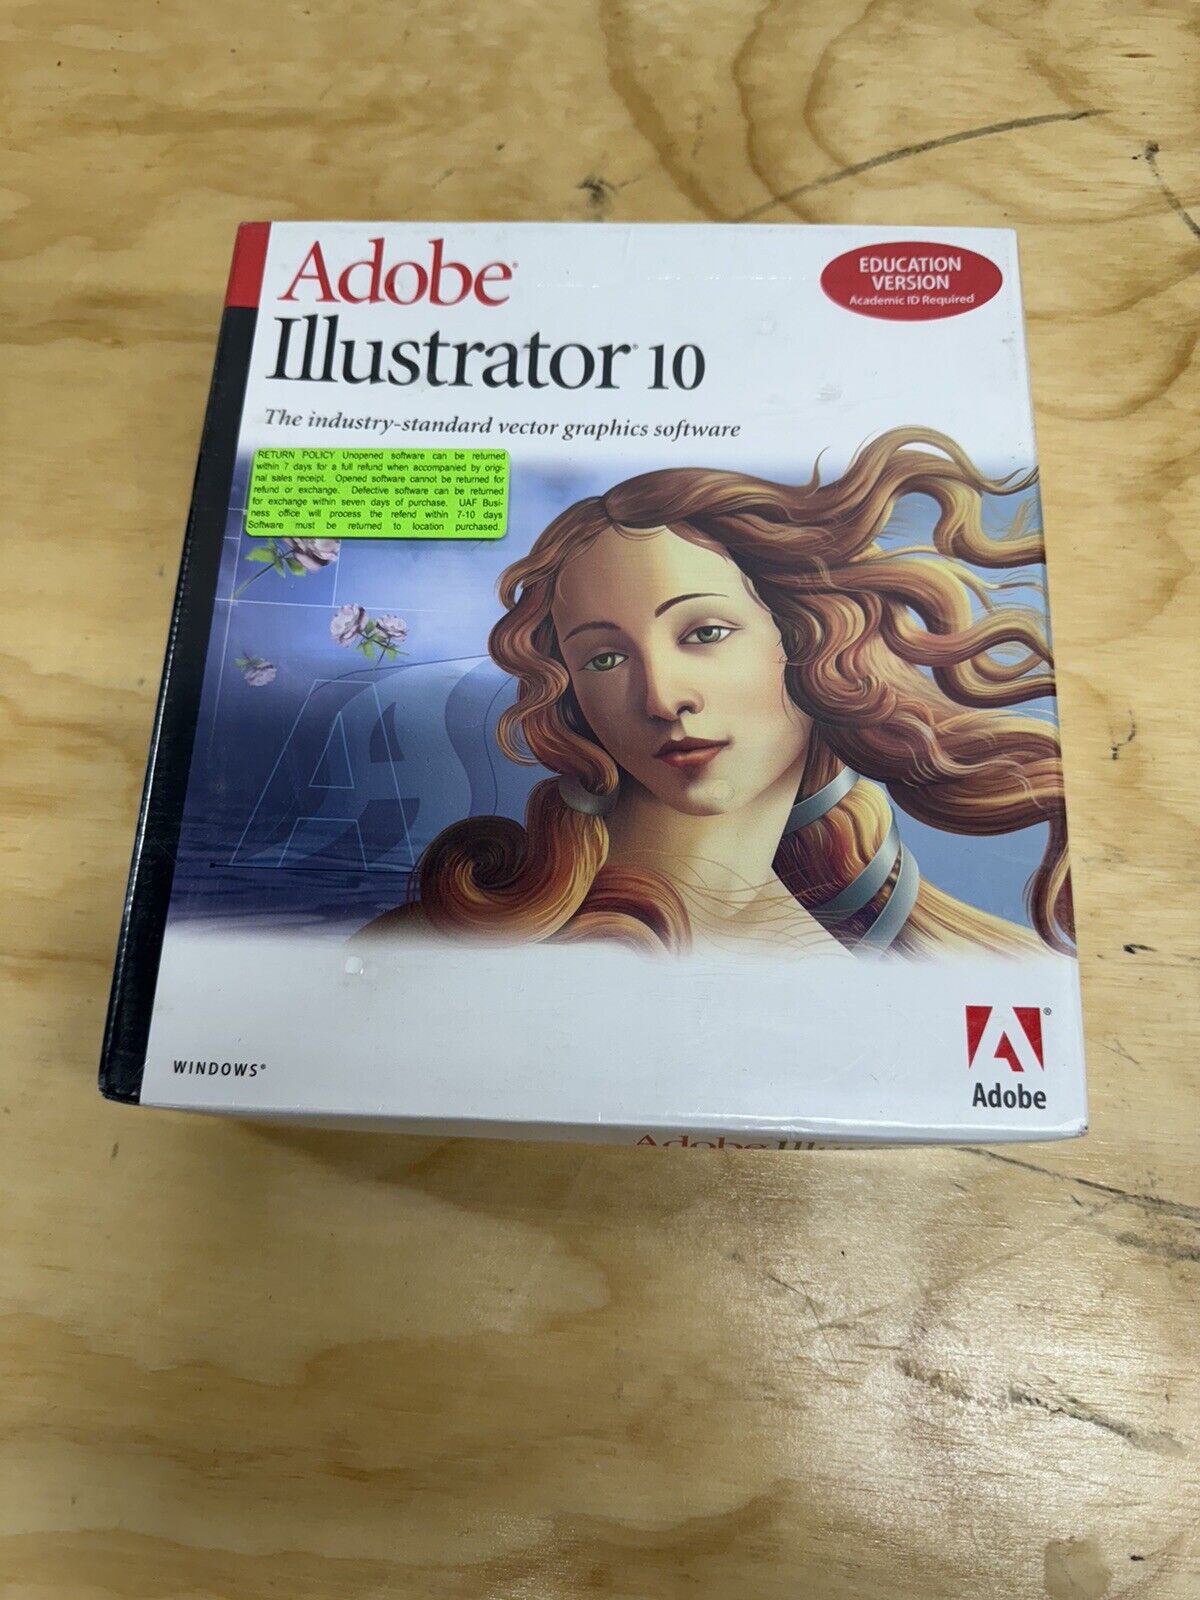 Adobe Illustrator 10 Macintosh Education Version Computer Software Serial Number